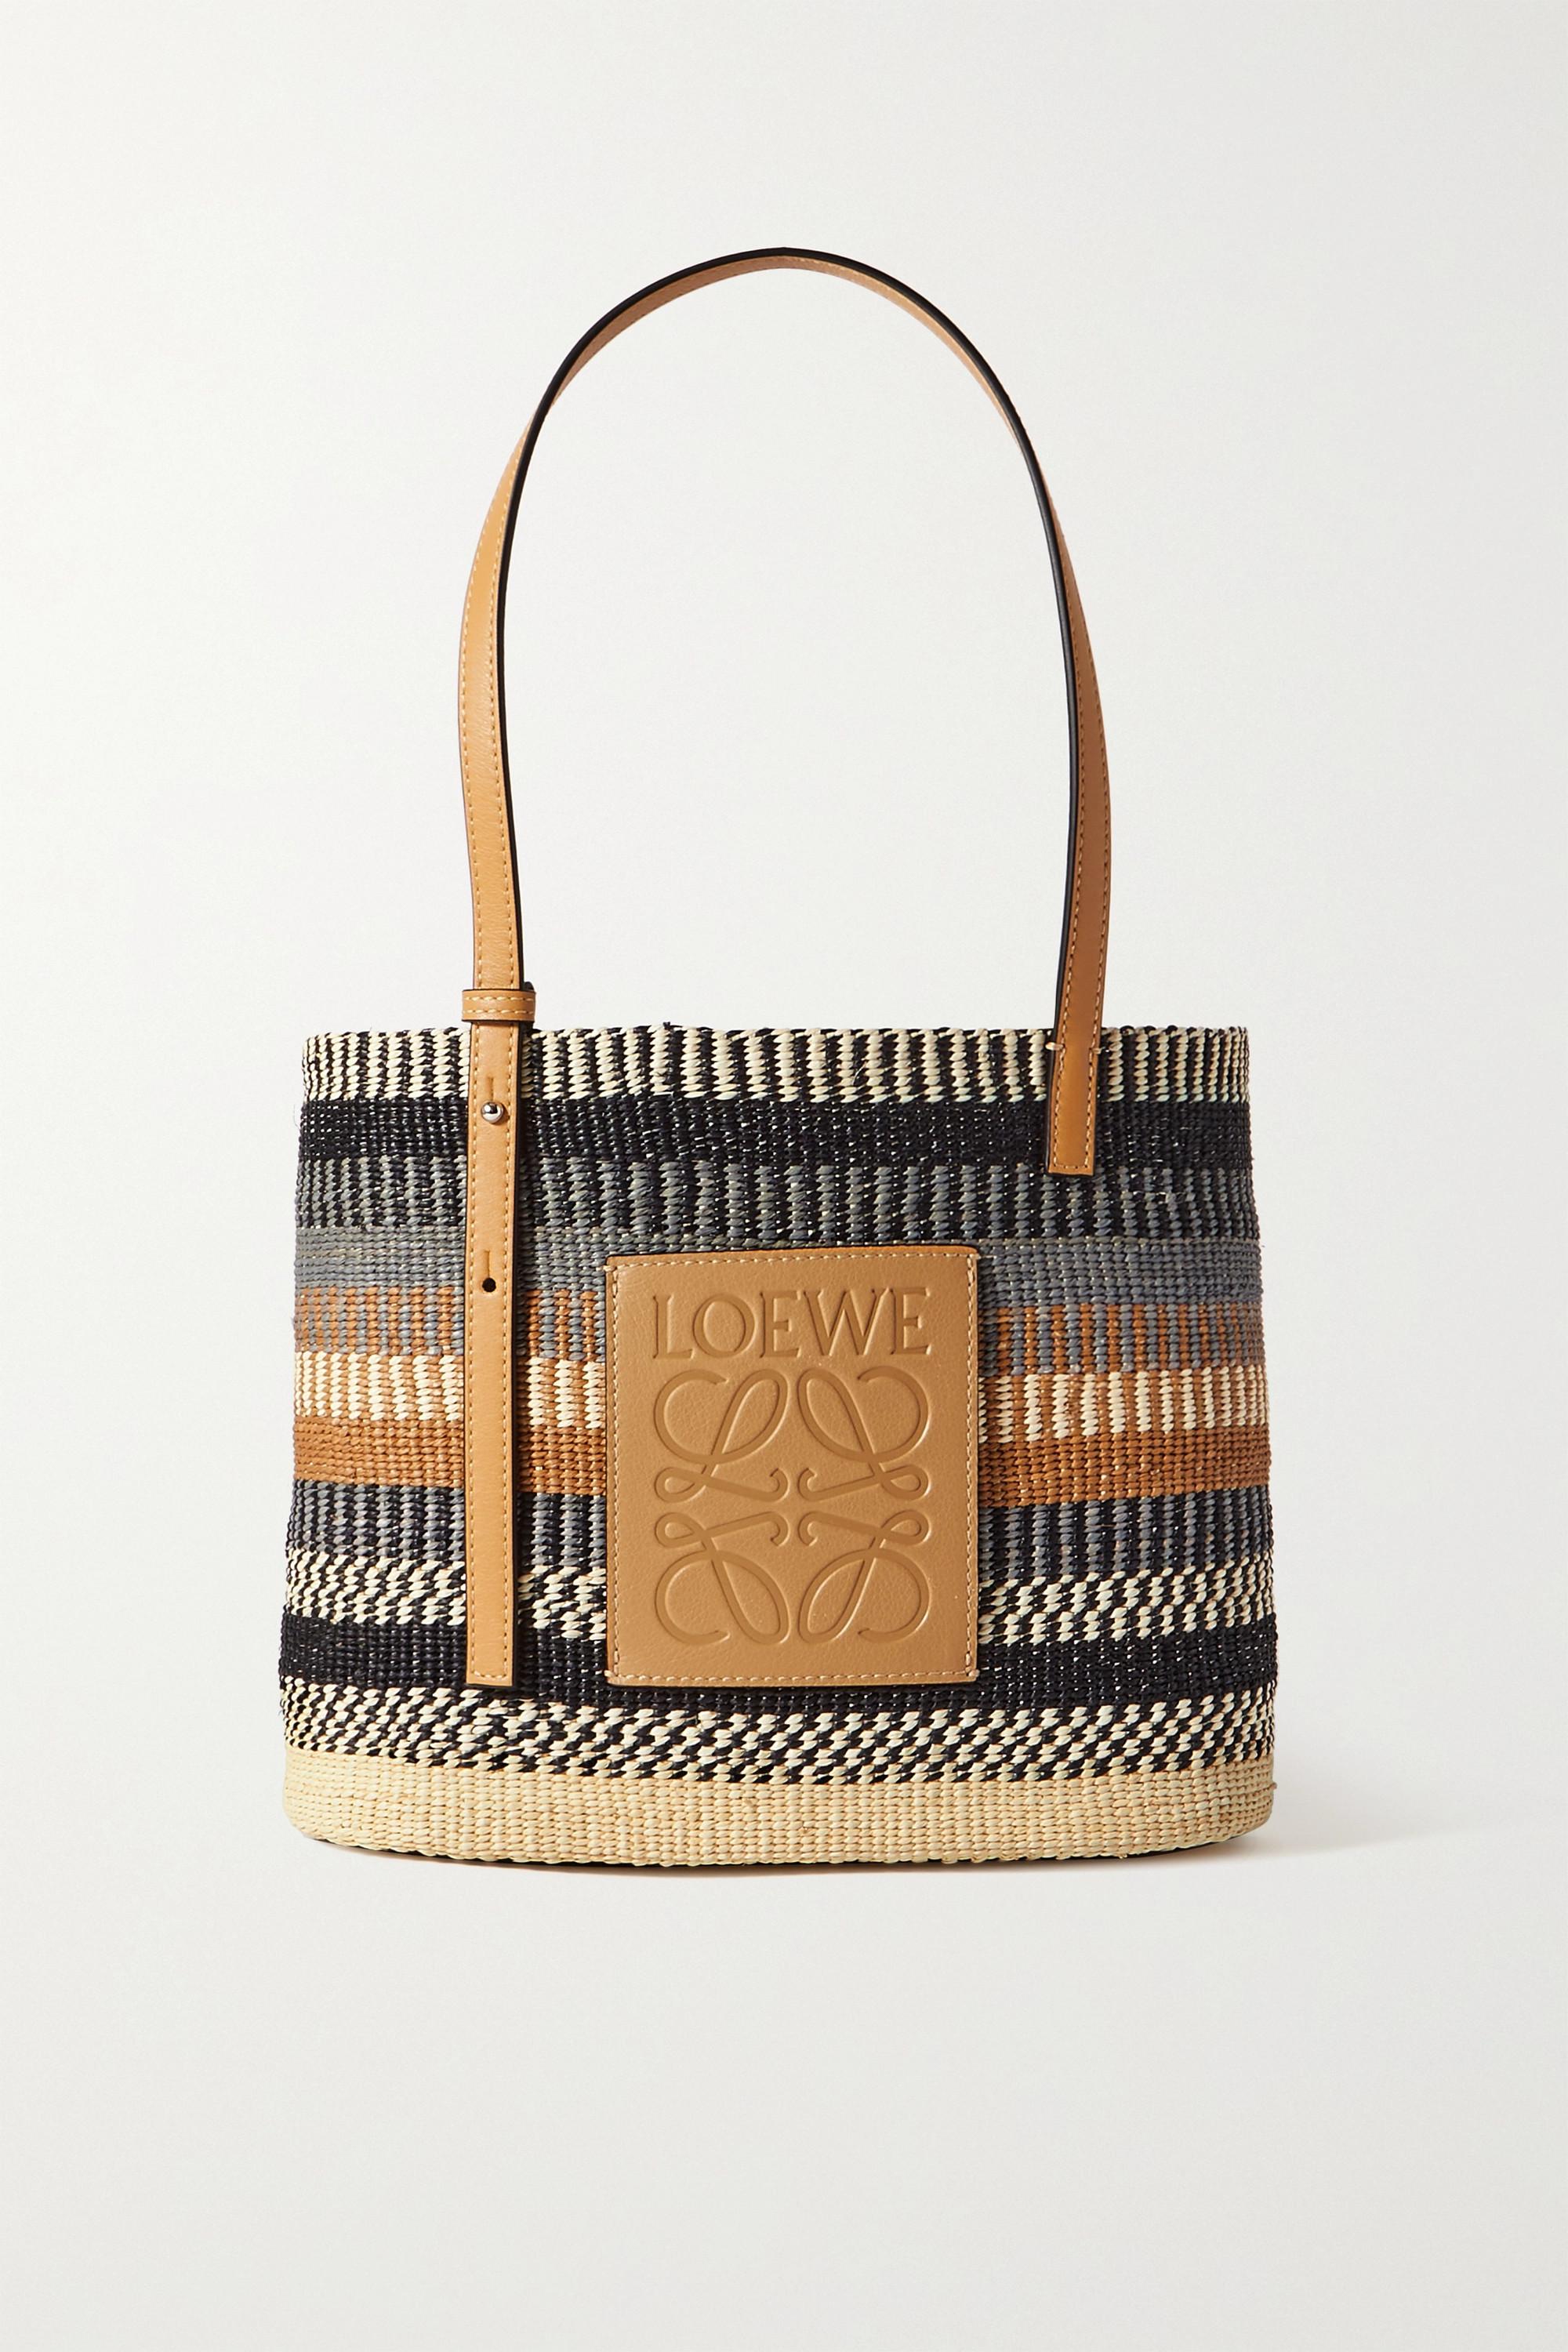 Loewe + Paula's Ibiza small leather-trimmed woven raffia tote - Women - Brown Tote Bags